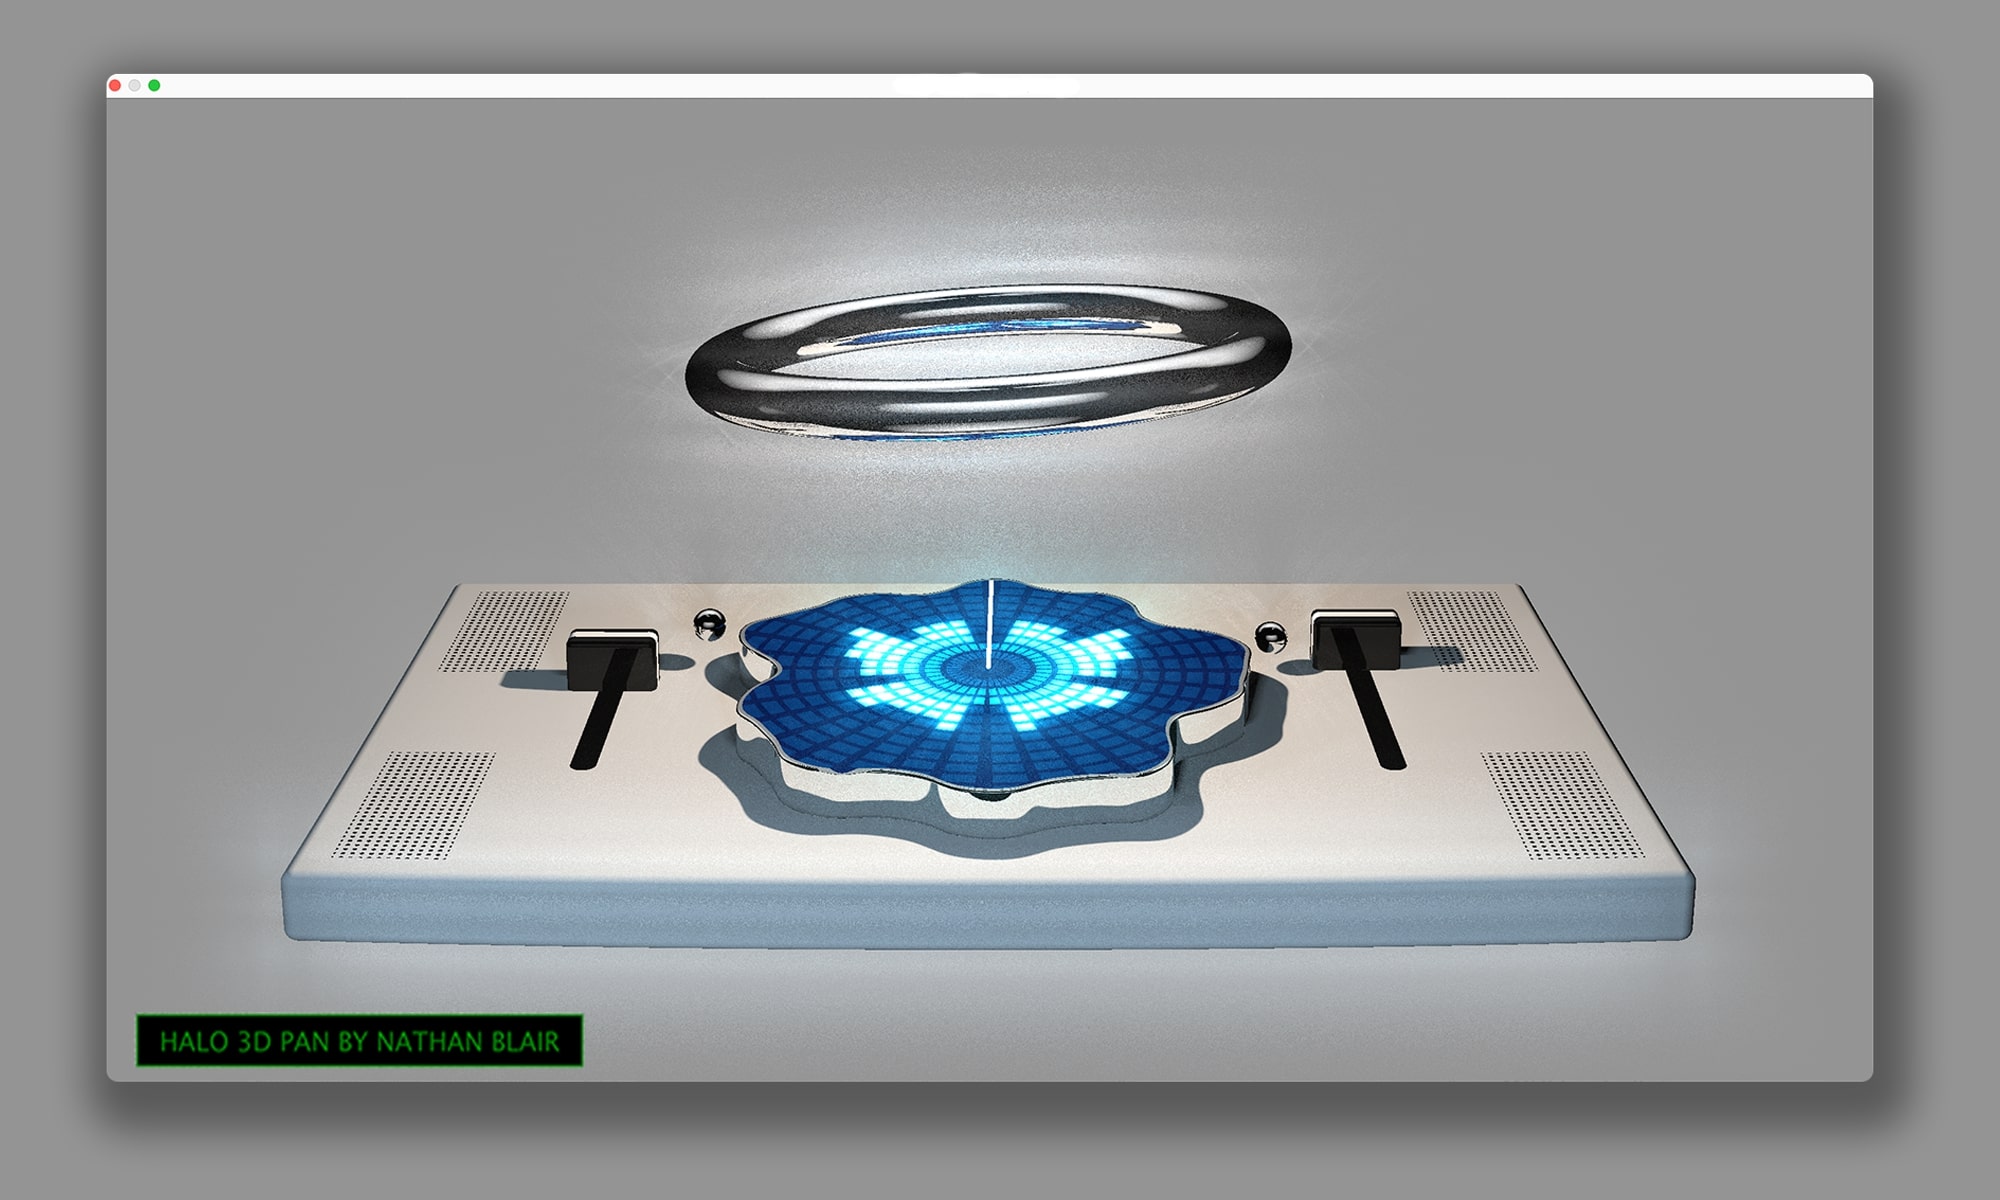 The Halo 3D Pan UI